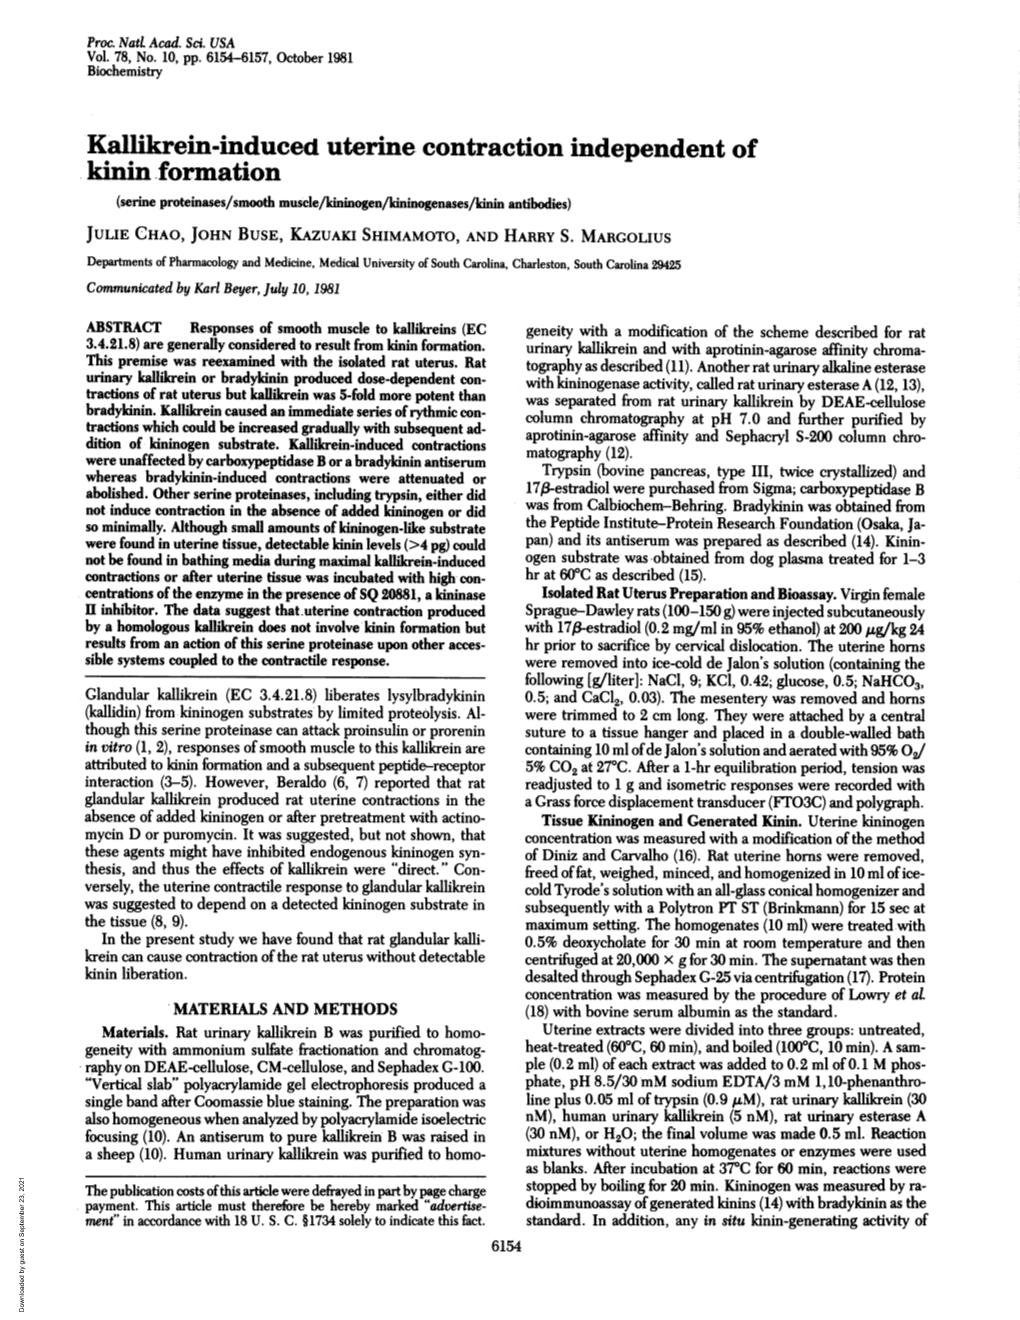 Kallikrein-Induced Uterine. Contraction Independent of Kinin Formation